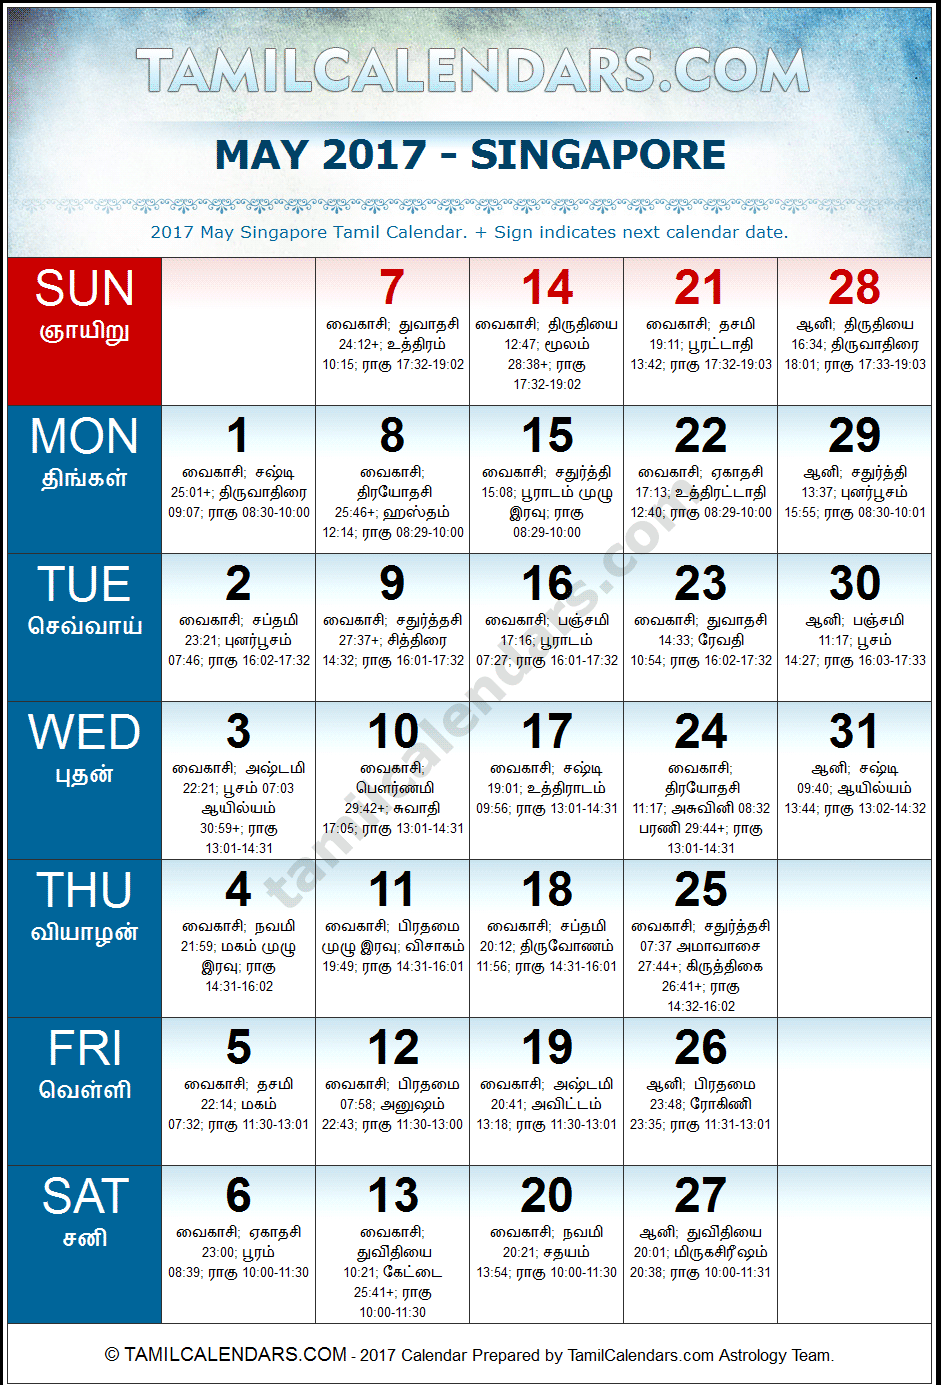 May 2017 Tamil Calendar for Singapore